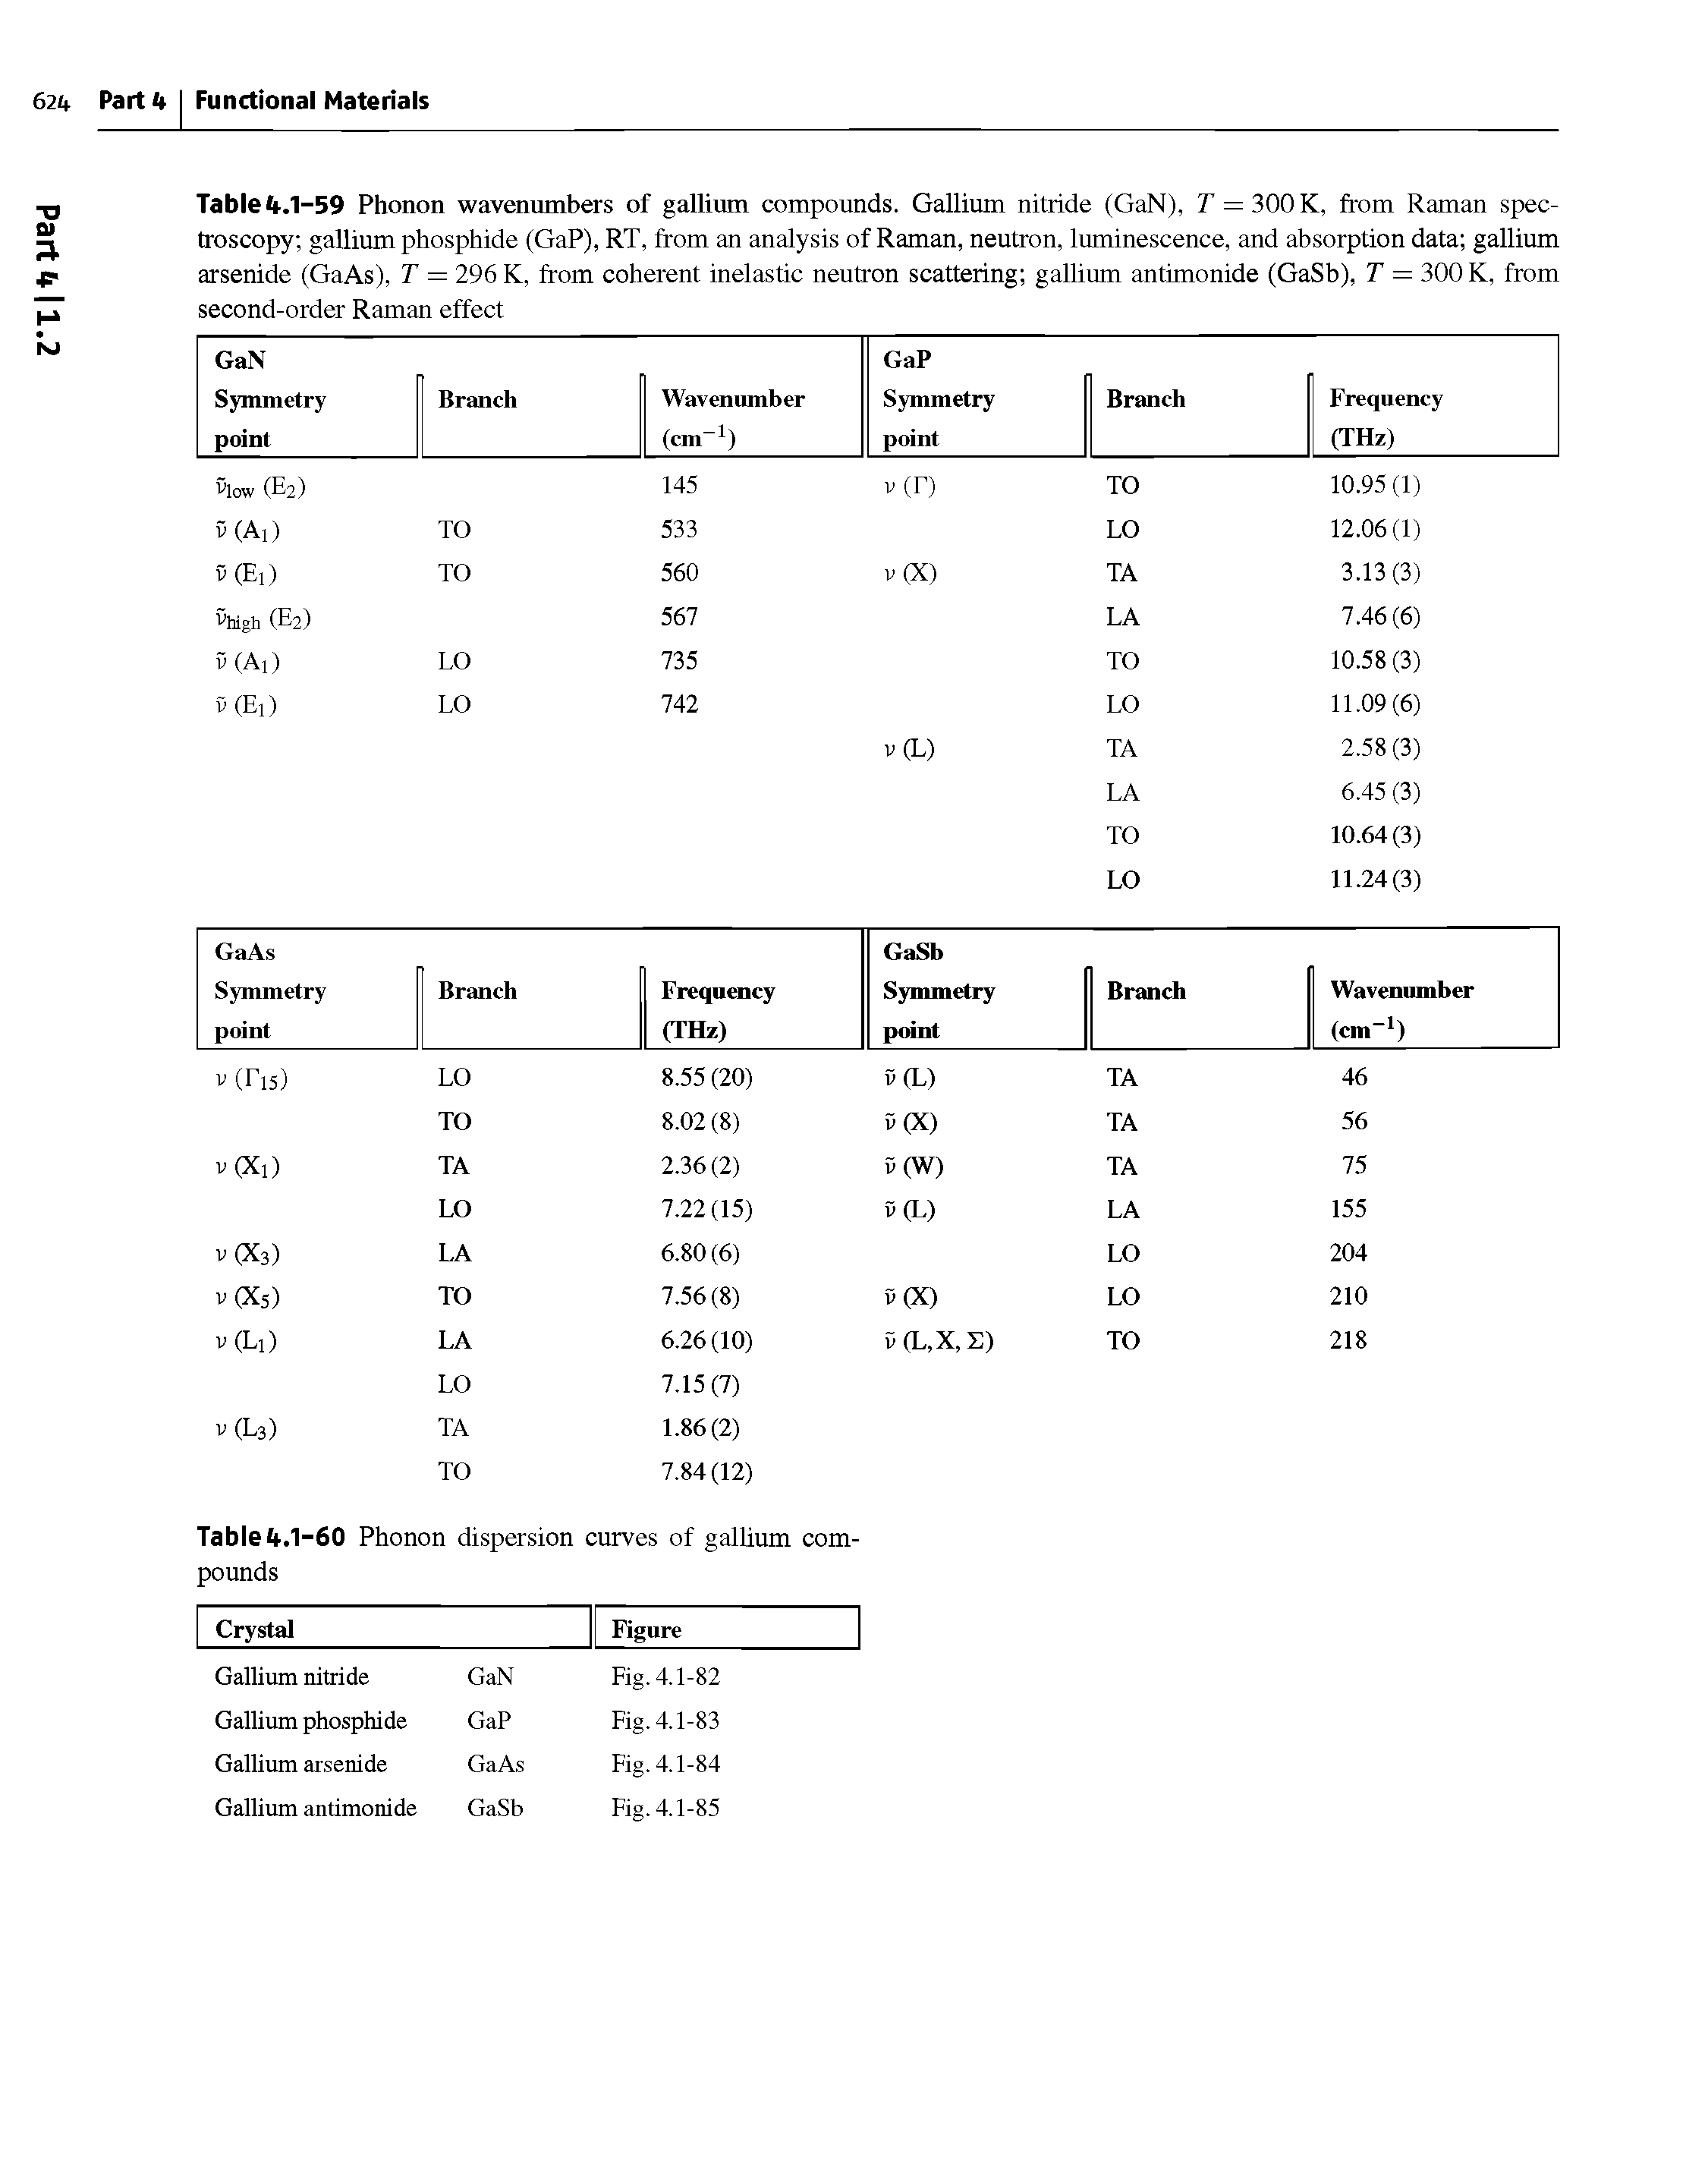 Table 4.1-59 Phonon wavenumbers of gallium compounds. Gallium nitride (GaN), T = 300K, from Raman spectroscopy gallium phosphide (GaP), RT, from an analysis of Raman, neutron, luminescence, and absorption data gallium arsenide (GaAs), T = 296 K, from coherent inelastic neutron scattering gallium antimonide (GaSb), T = 300 K, from second-order Raman effect...